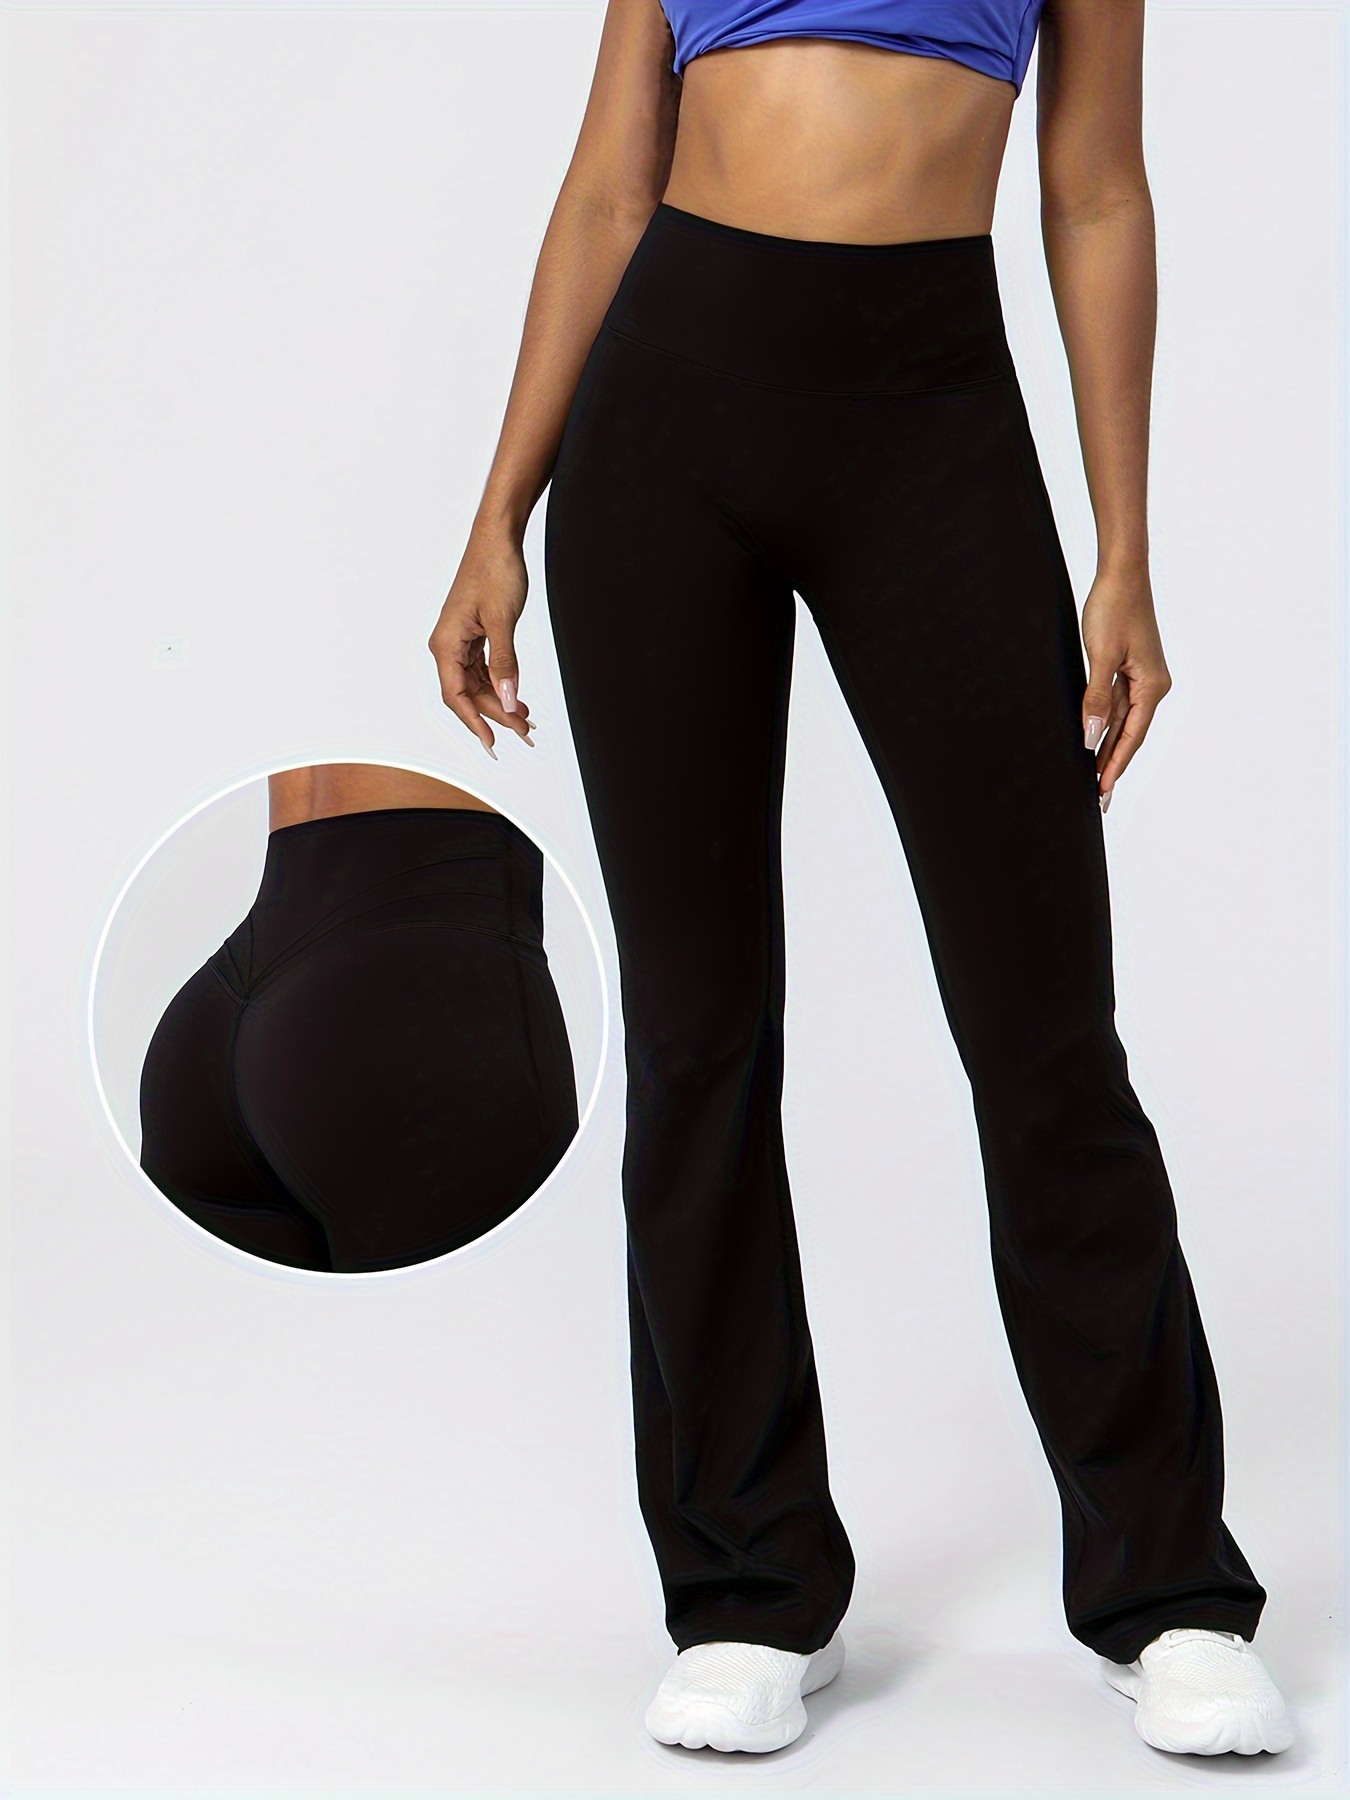 nsendm Unisex Pants Adult Yoga Pants for Women Tall with Pocket Sports Yoga  Shorts Pocket Fashion Women's Pants Fold over Yoga Pants for(Black, M) 